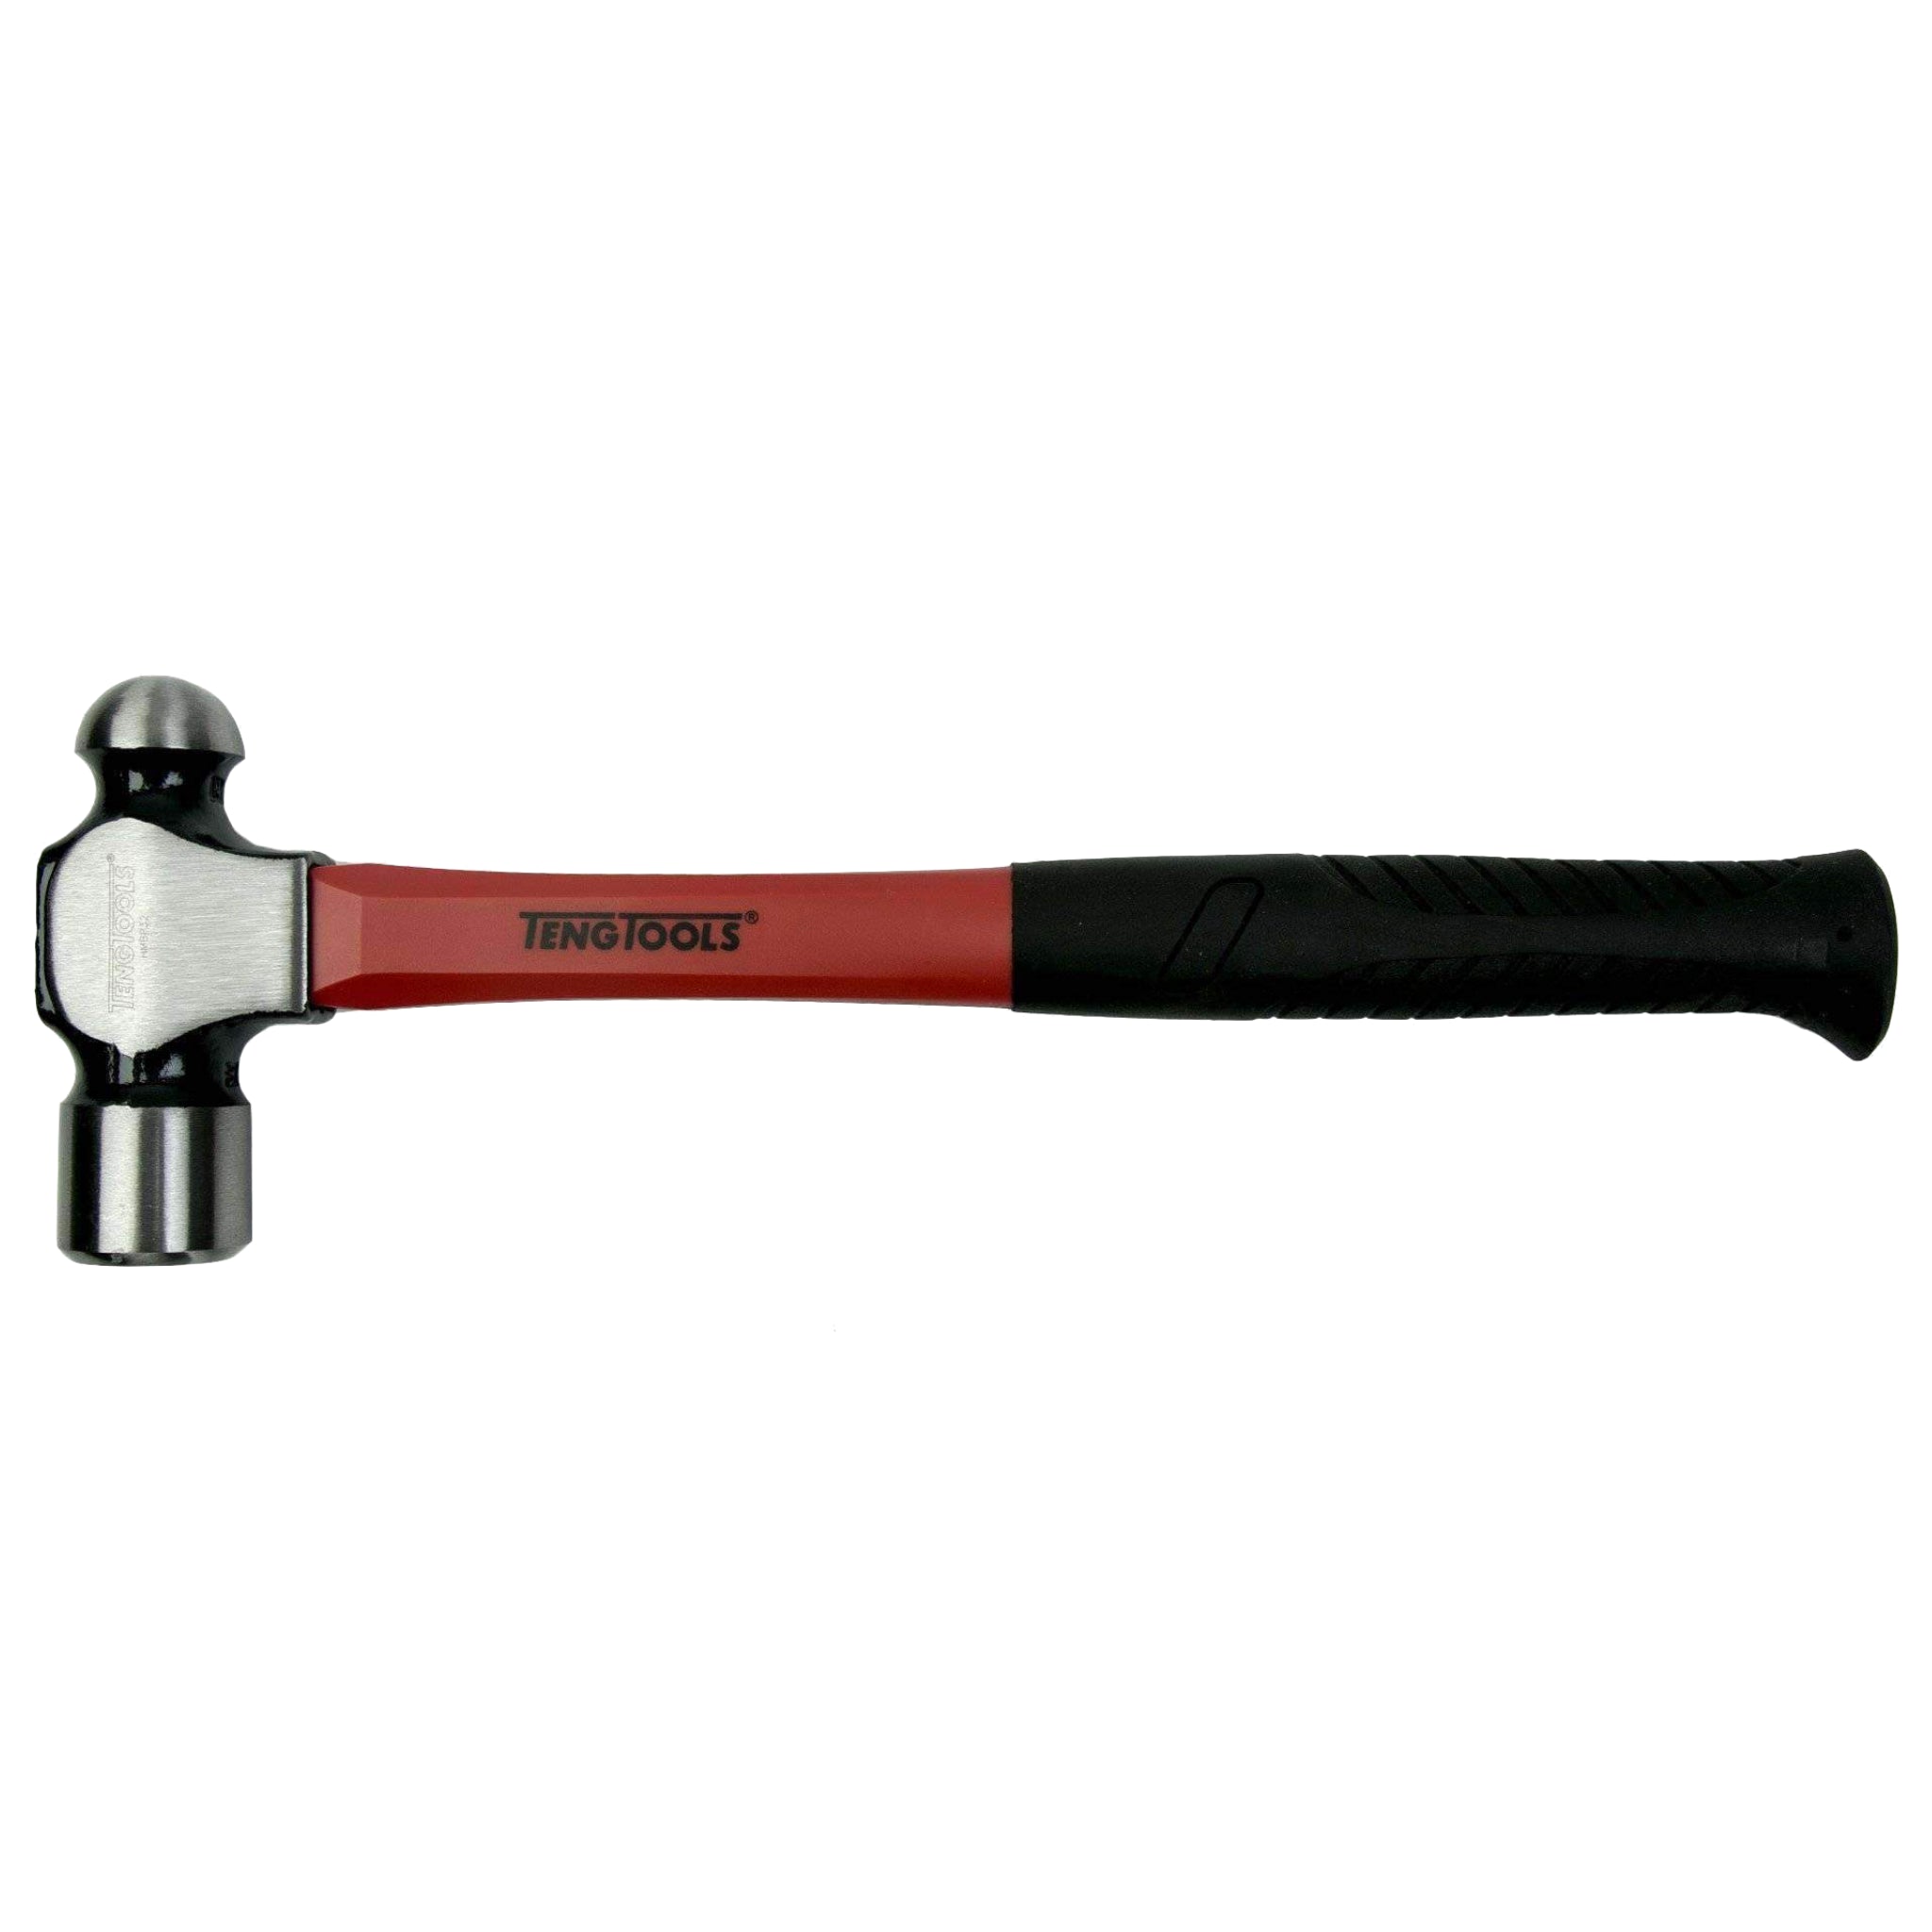 Teng Tools Ball Pein Hammer Range 12, 16, 24 and 32 Ounce (Oz) Hammers